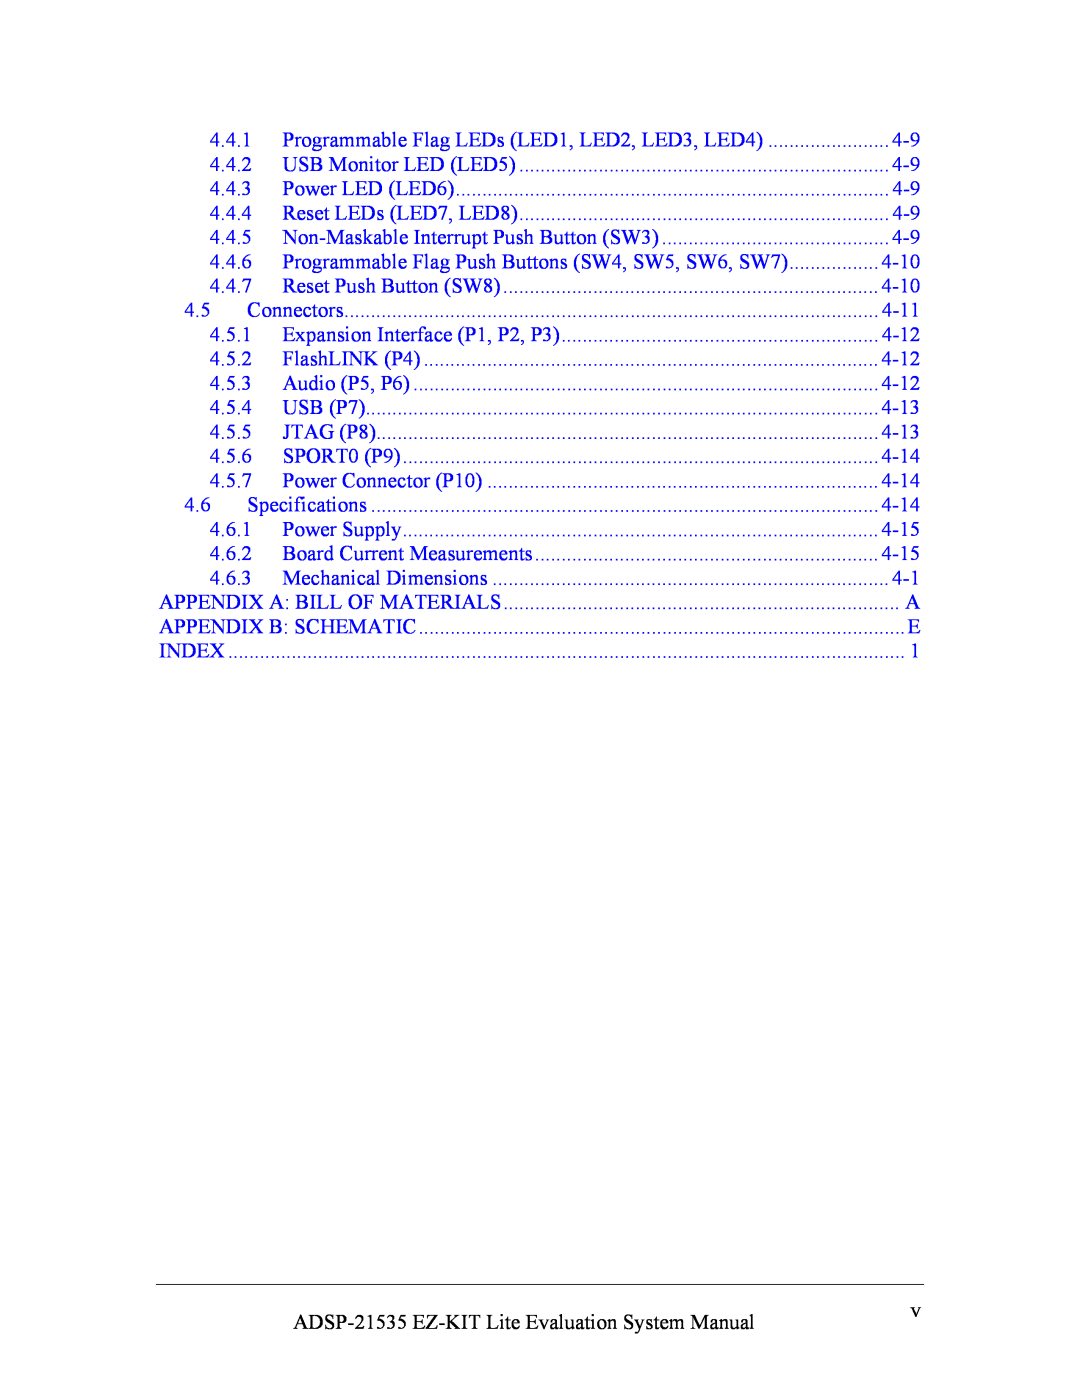 Analog Devices ADSP-21535 E-KIT LITE, 82-0000603-01 ADSP-21535 EZ-KIT Lite Evaluation System Manual, Appendix B Schematic 